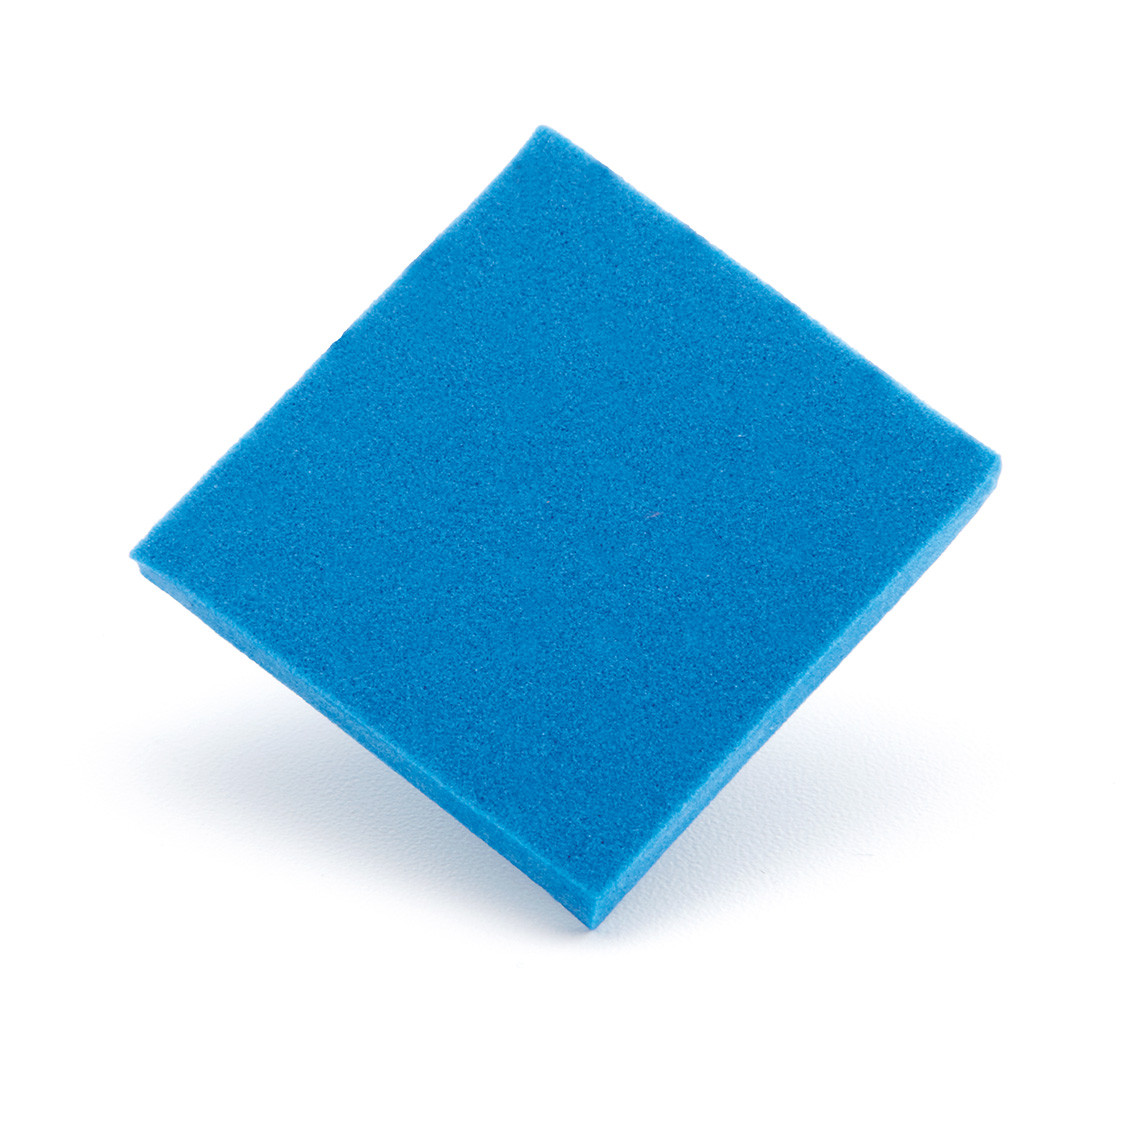 Tecnotil EVA 3 mm Shore 35 densité 210 plaque de 105x95 cm Bleu